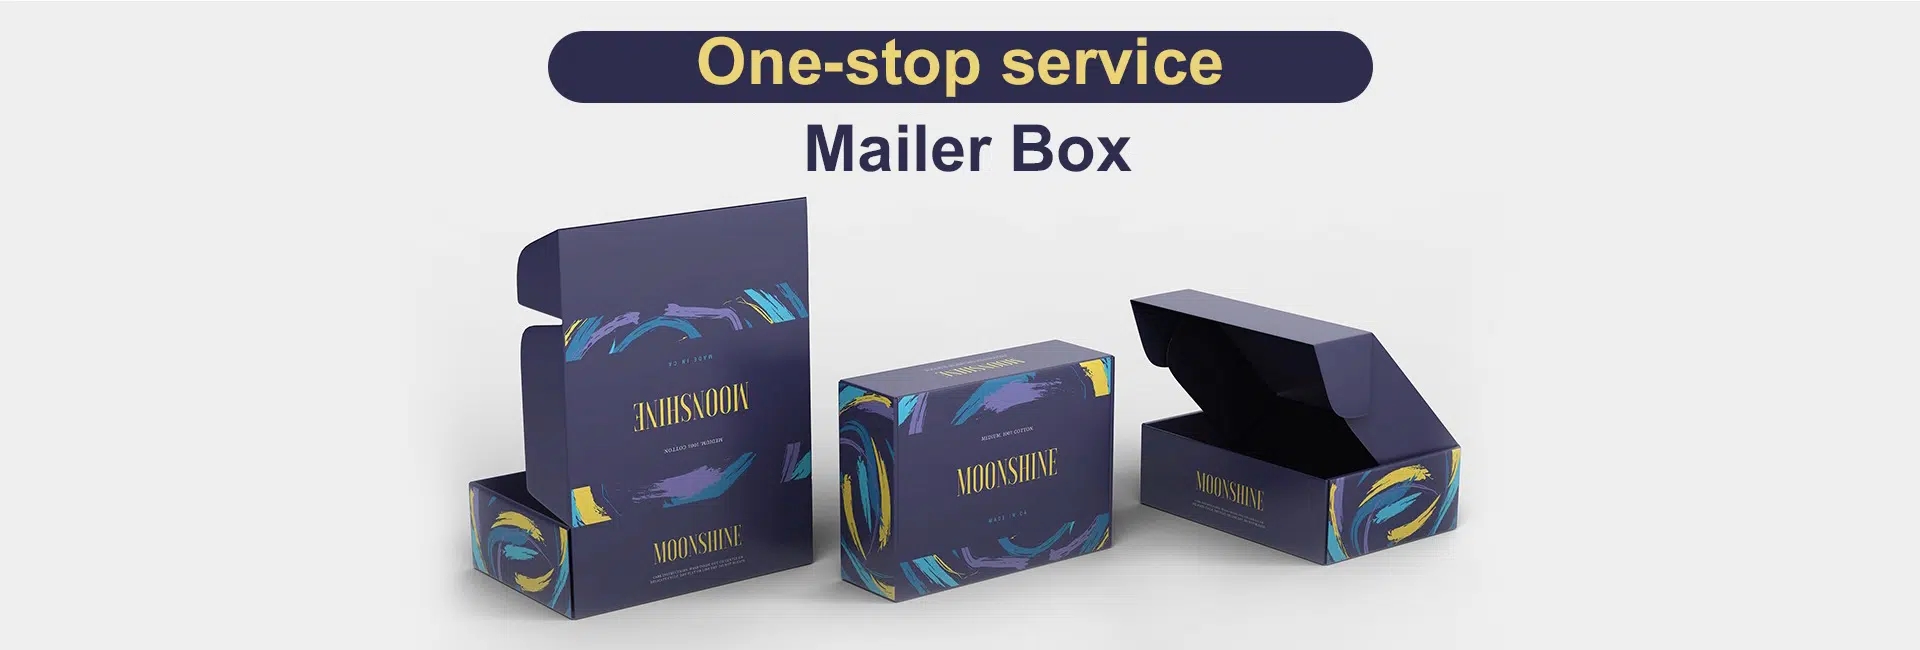 mailer-box-1.jpg.webp